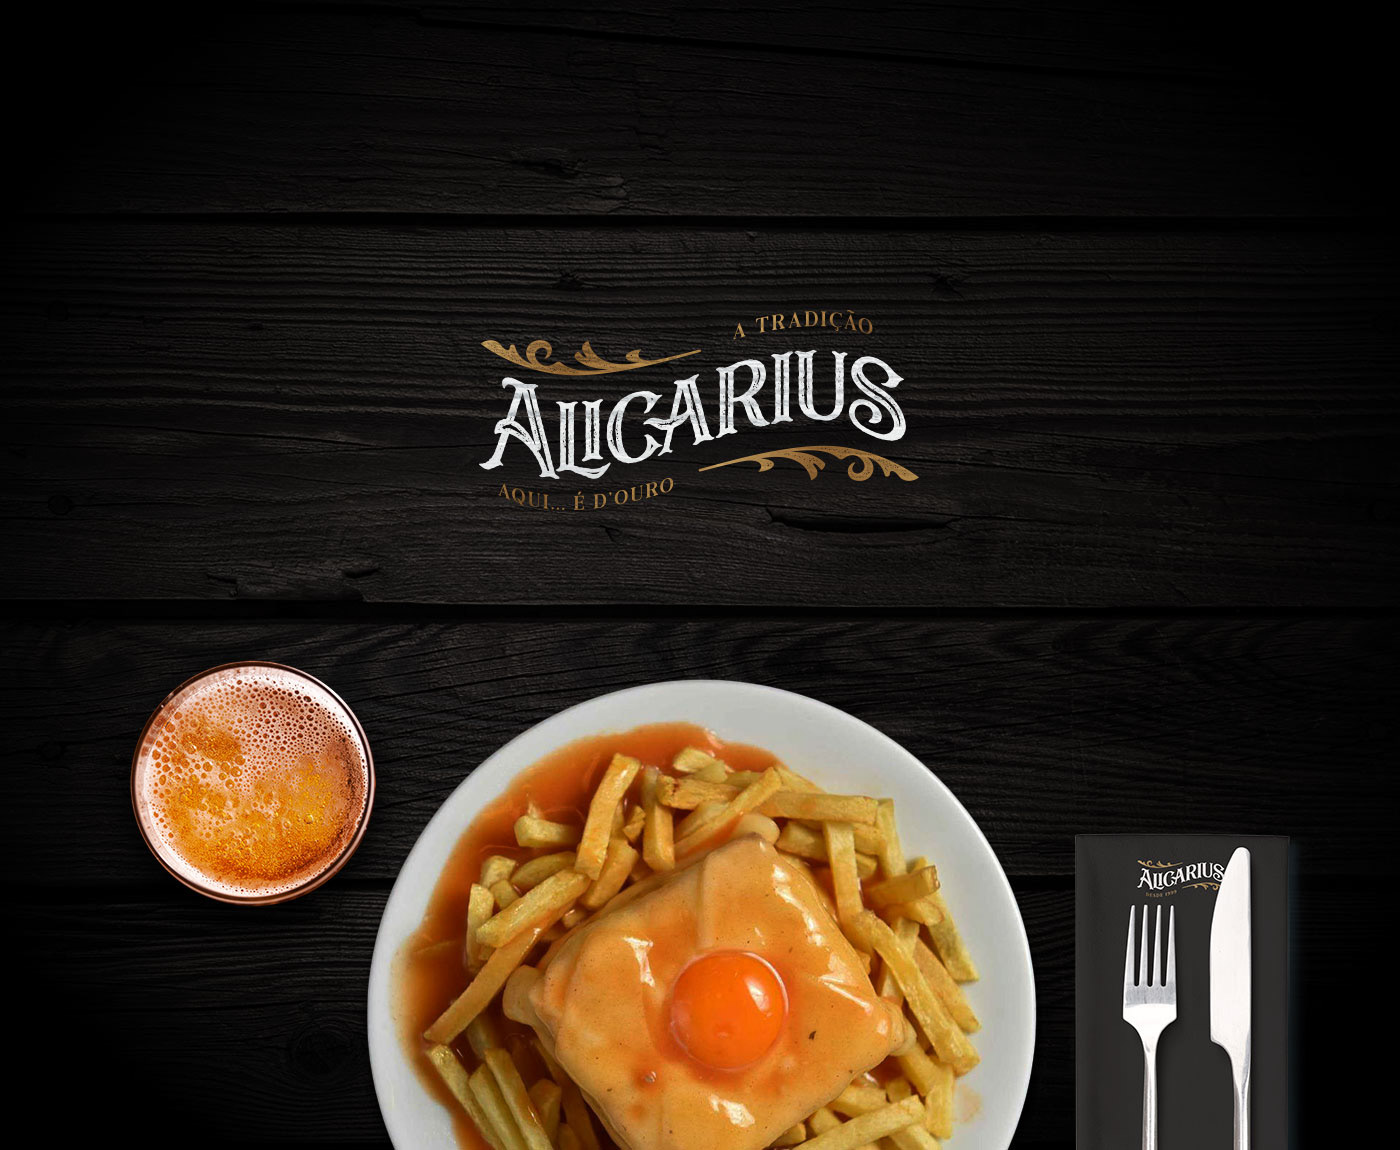 Alicarius branding  restaurant black gold francesinha